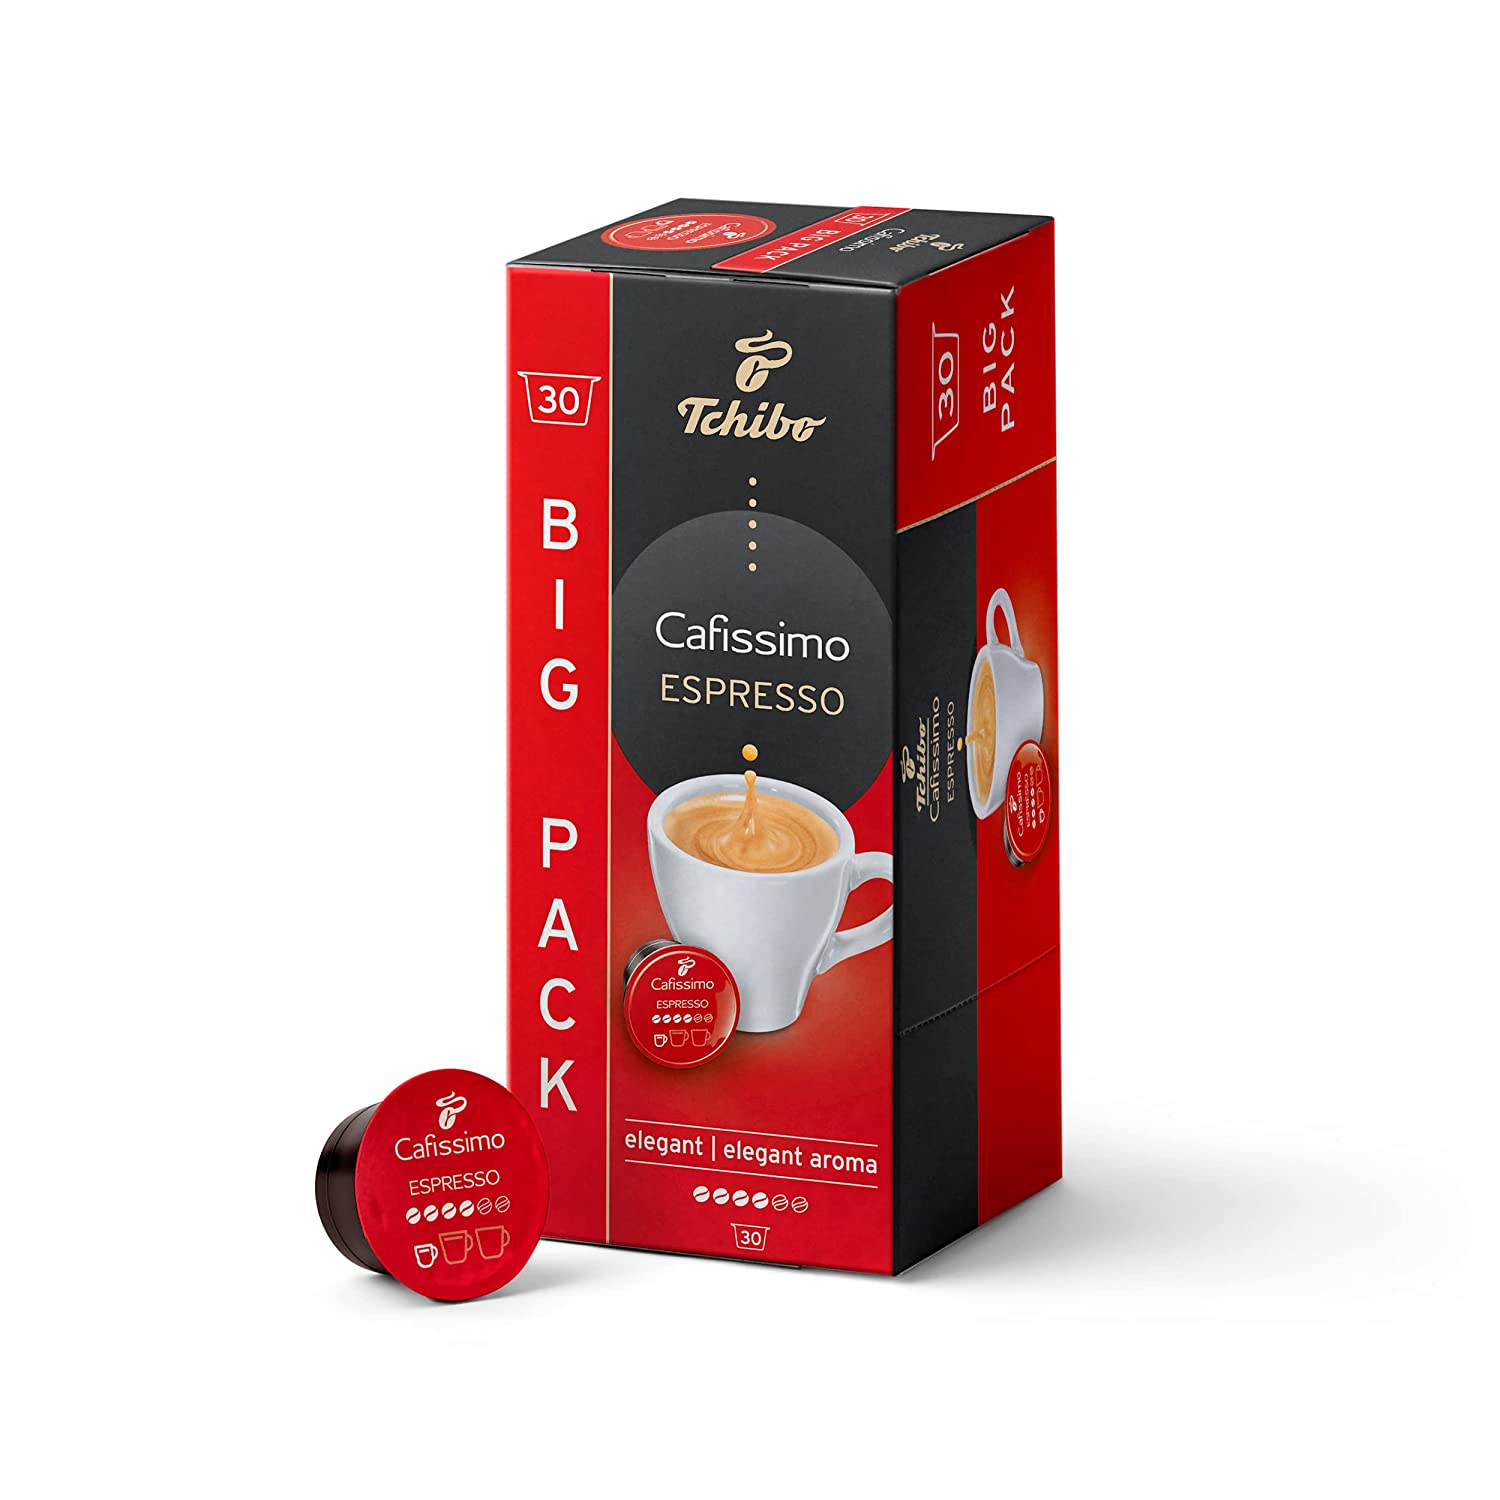 Tchibo Cafissimo Espresso Elegant coffee capsules, 30 pieces (coffee, expressive with a full aroma), sustainable & fair trade